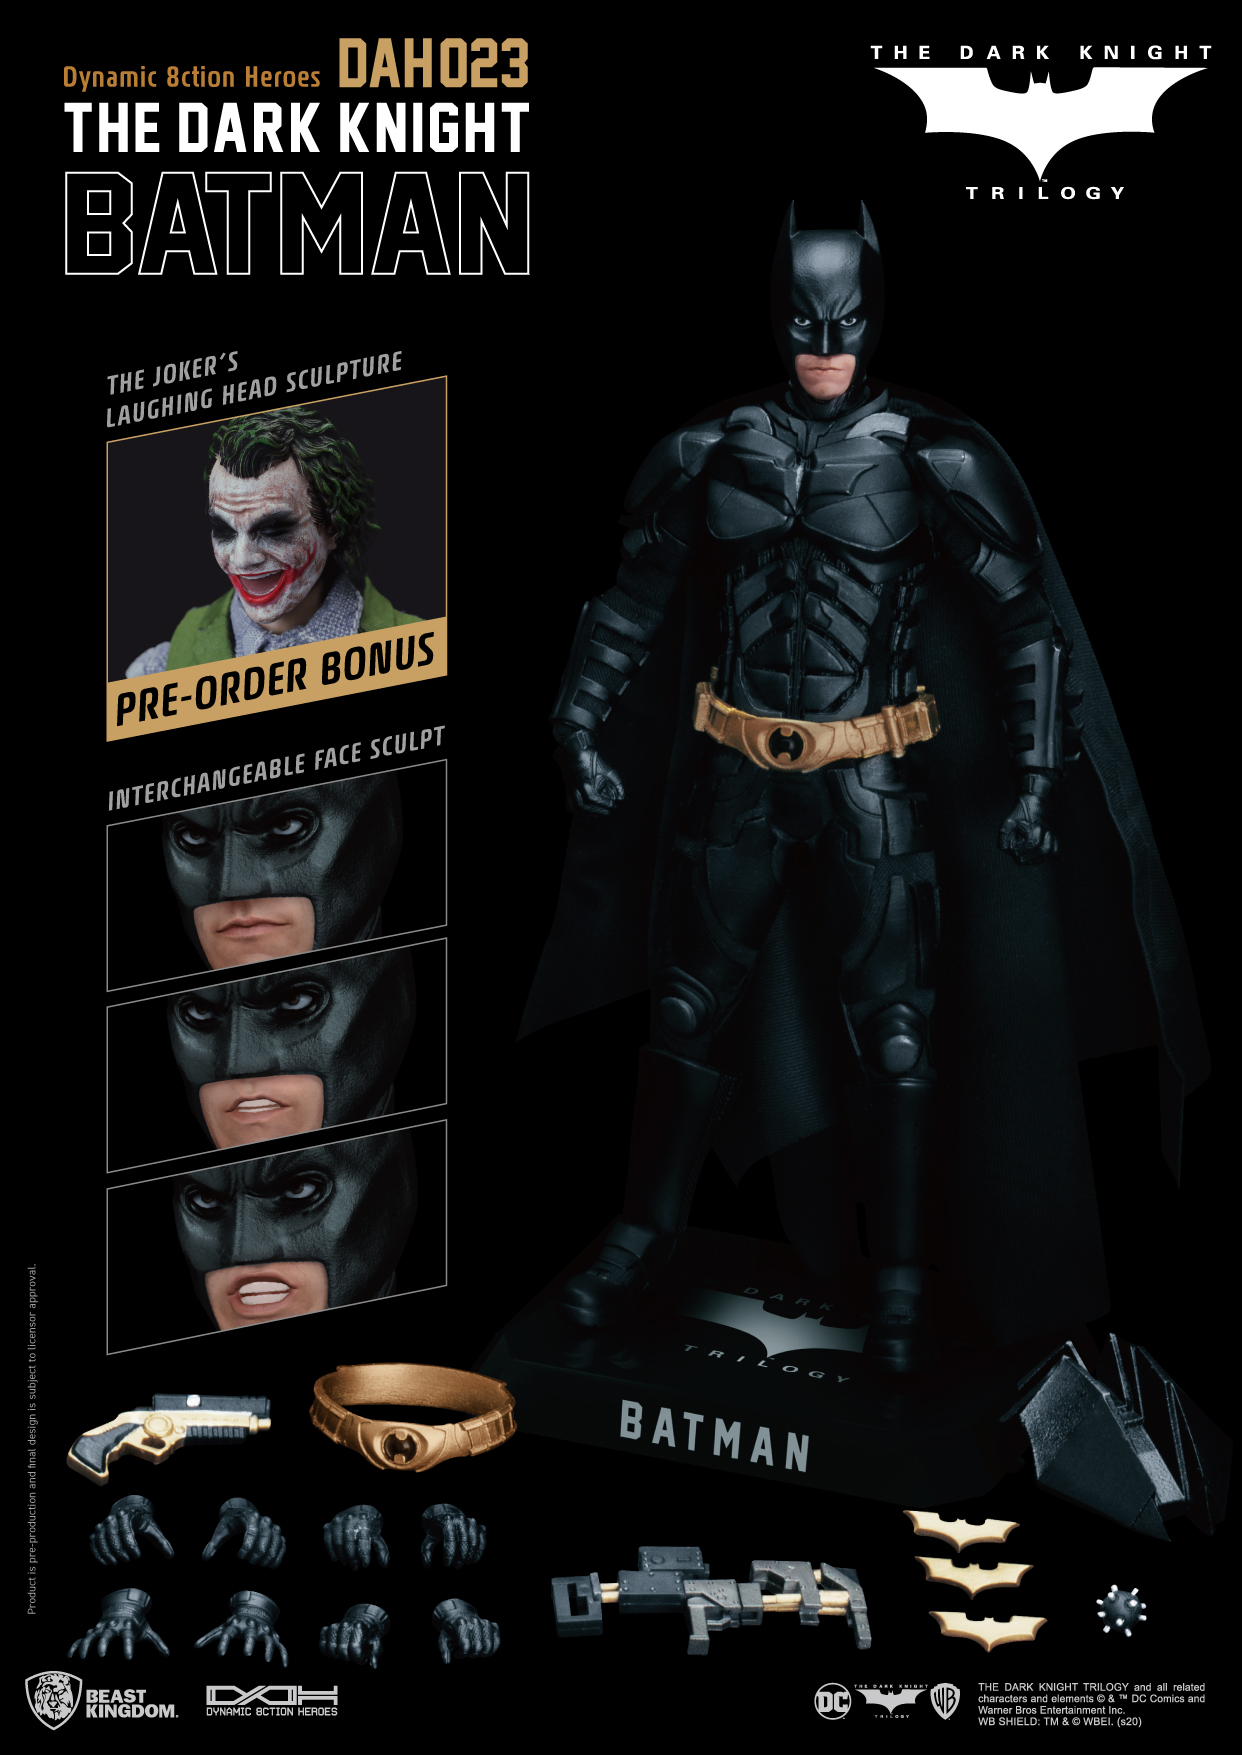 DC Dynamic 8ction Heroes : The Dark Knight - Batman (DAH-023)